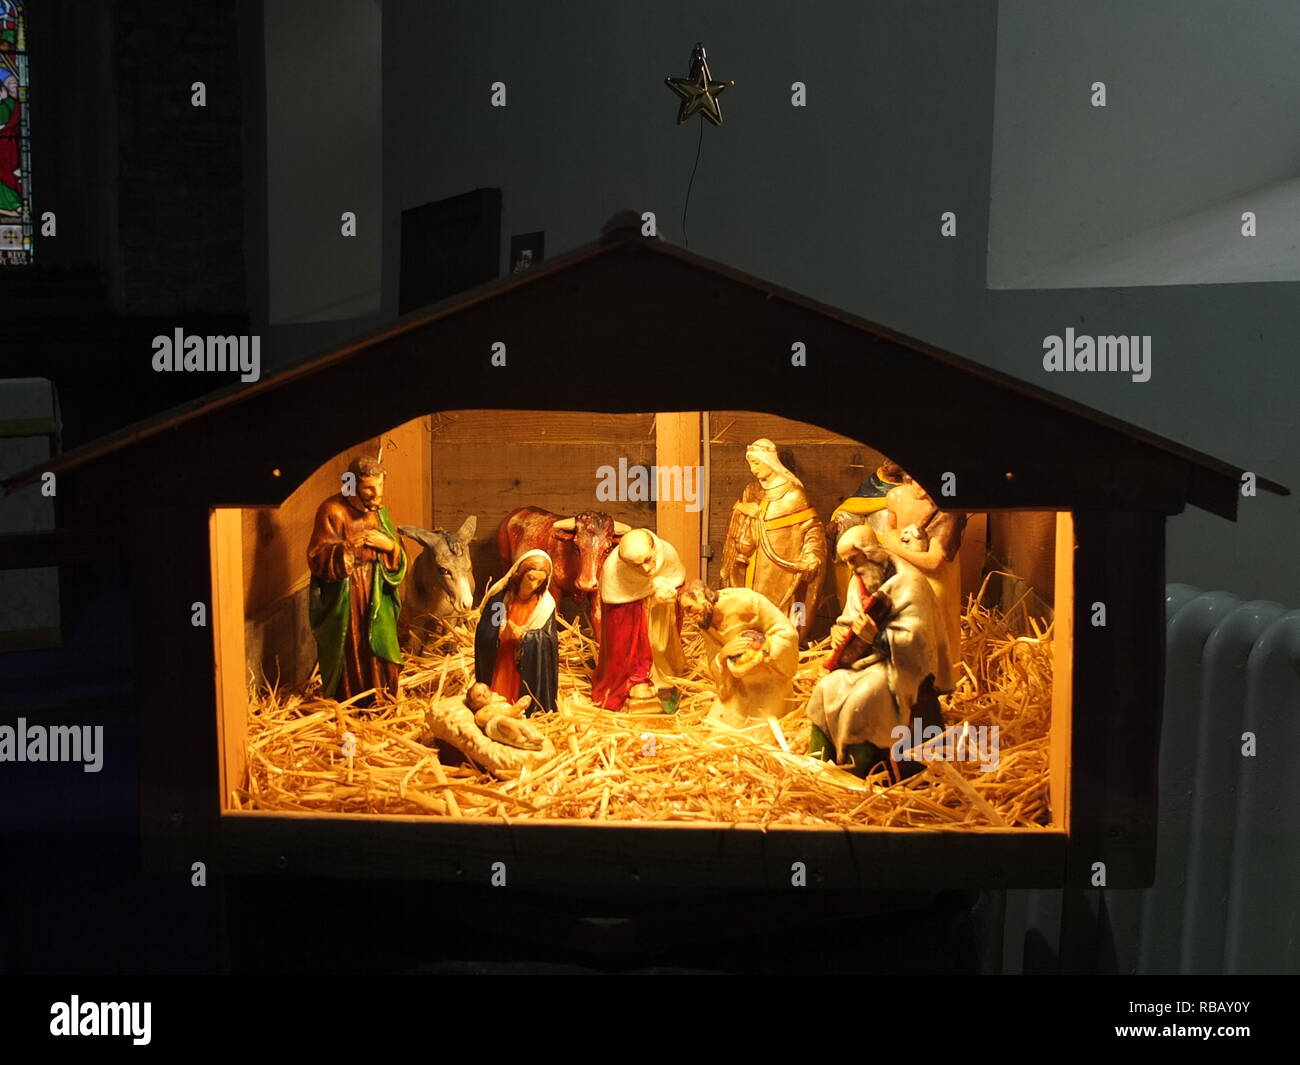 Illuminated crib nativity scene in a church for Christmas (St Edmunds Church, Castleton, Derbyshire, UK) Stock Photo